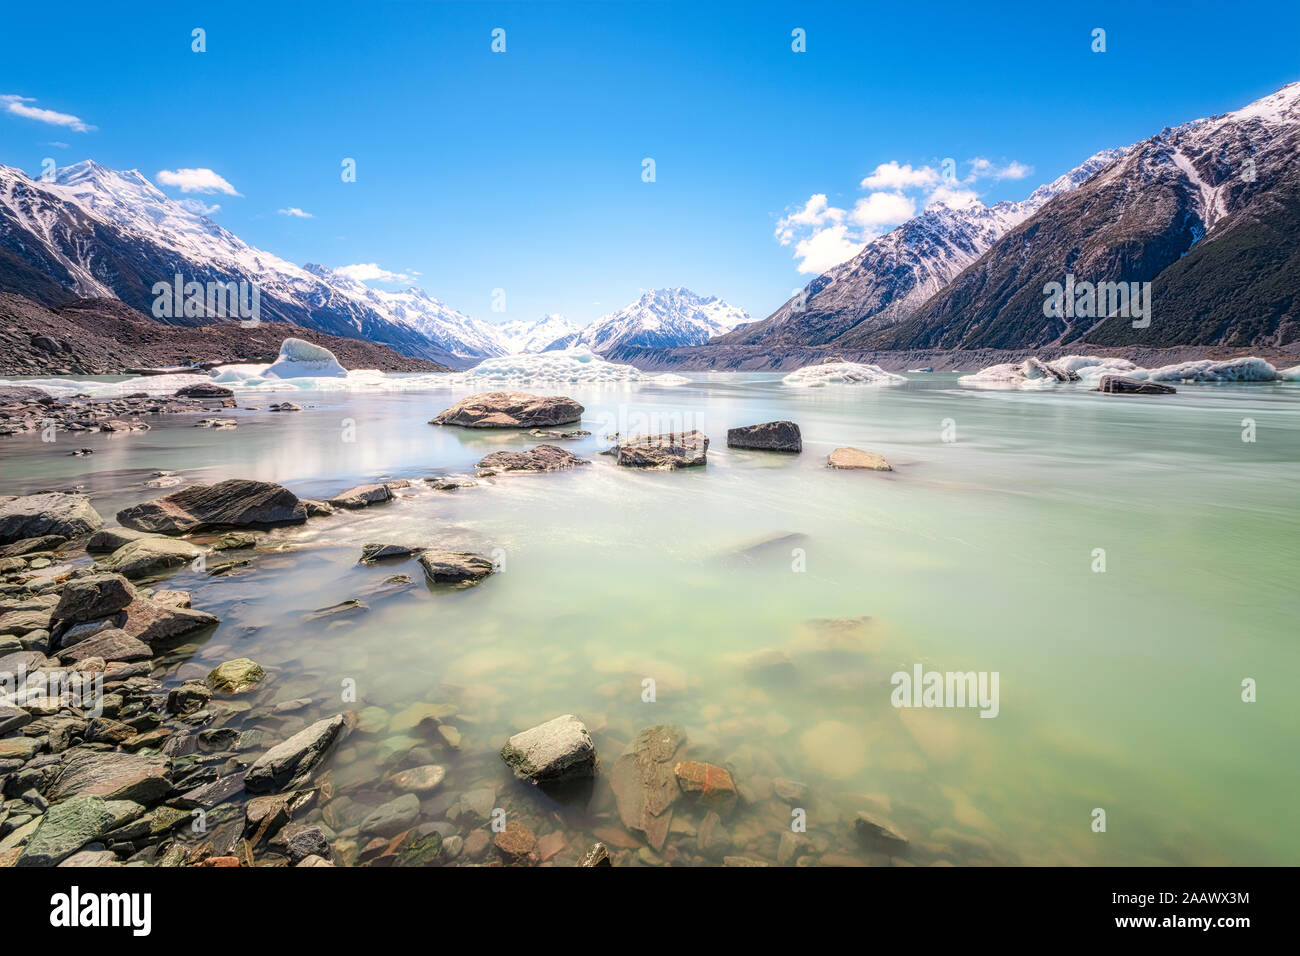 New Zealand, South Island, Rocky shore of Tasman Lake with icebergs, glacier and mountain backdrop Stock Photo